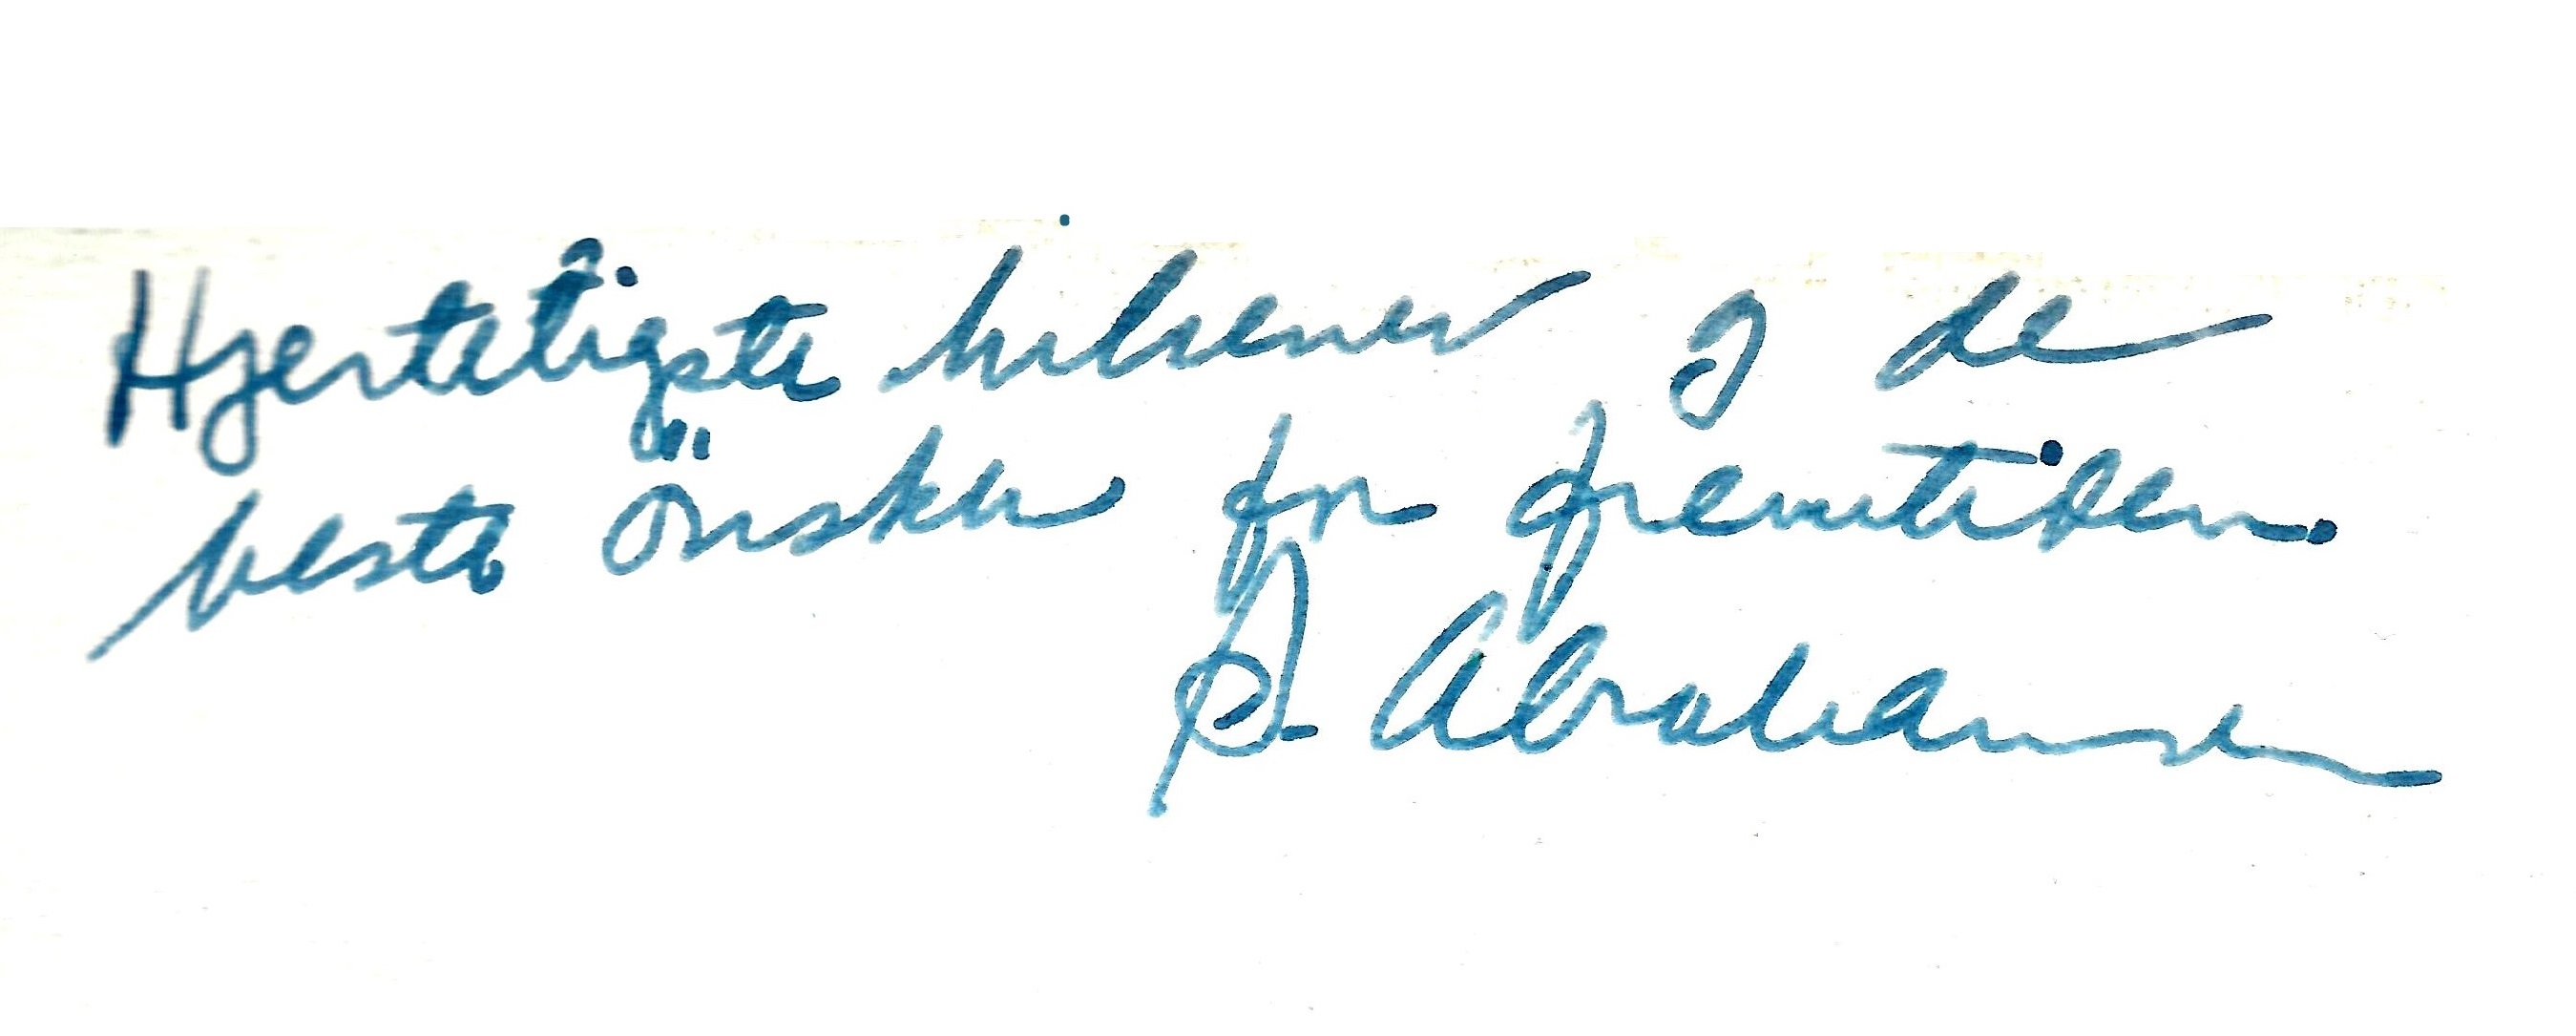 Samuel Abrahamsen's handwriting.